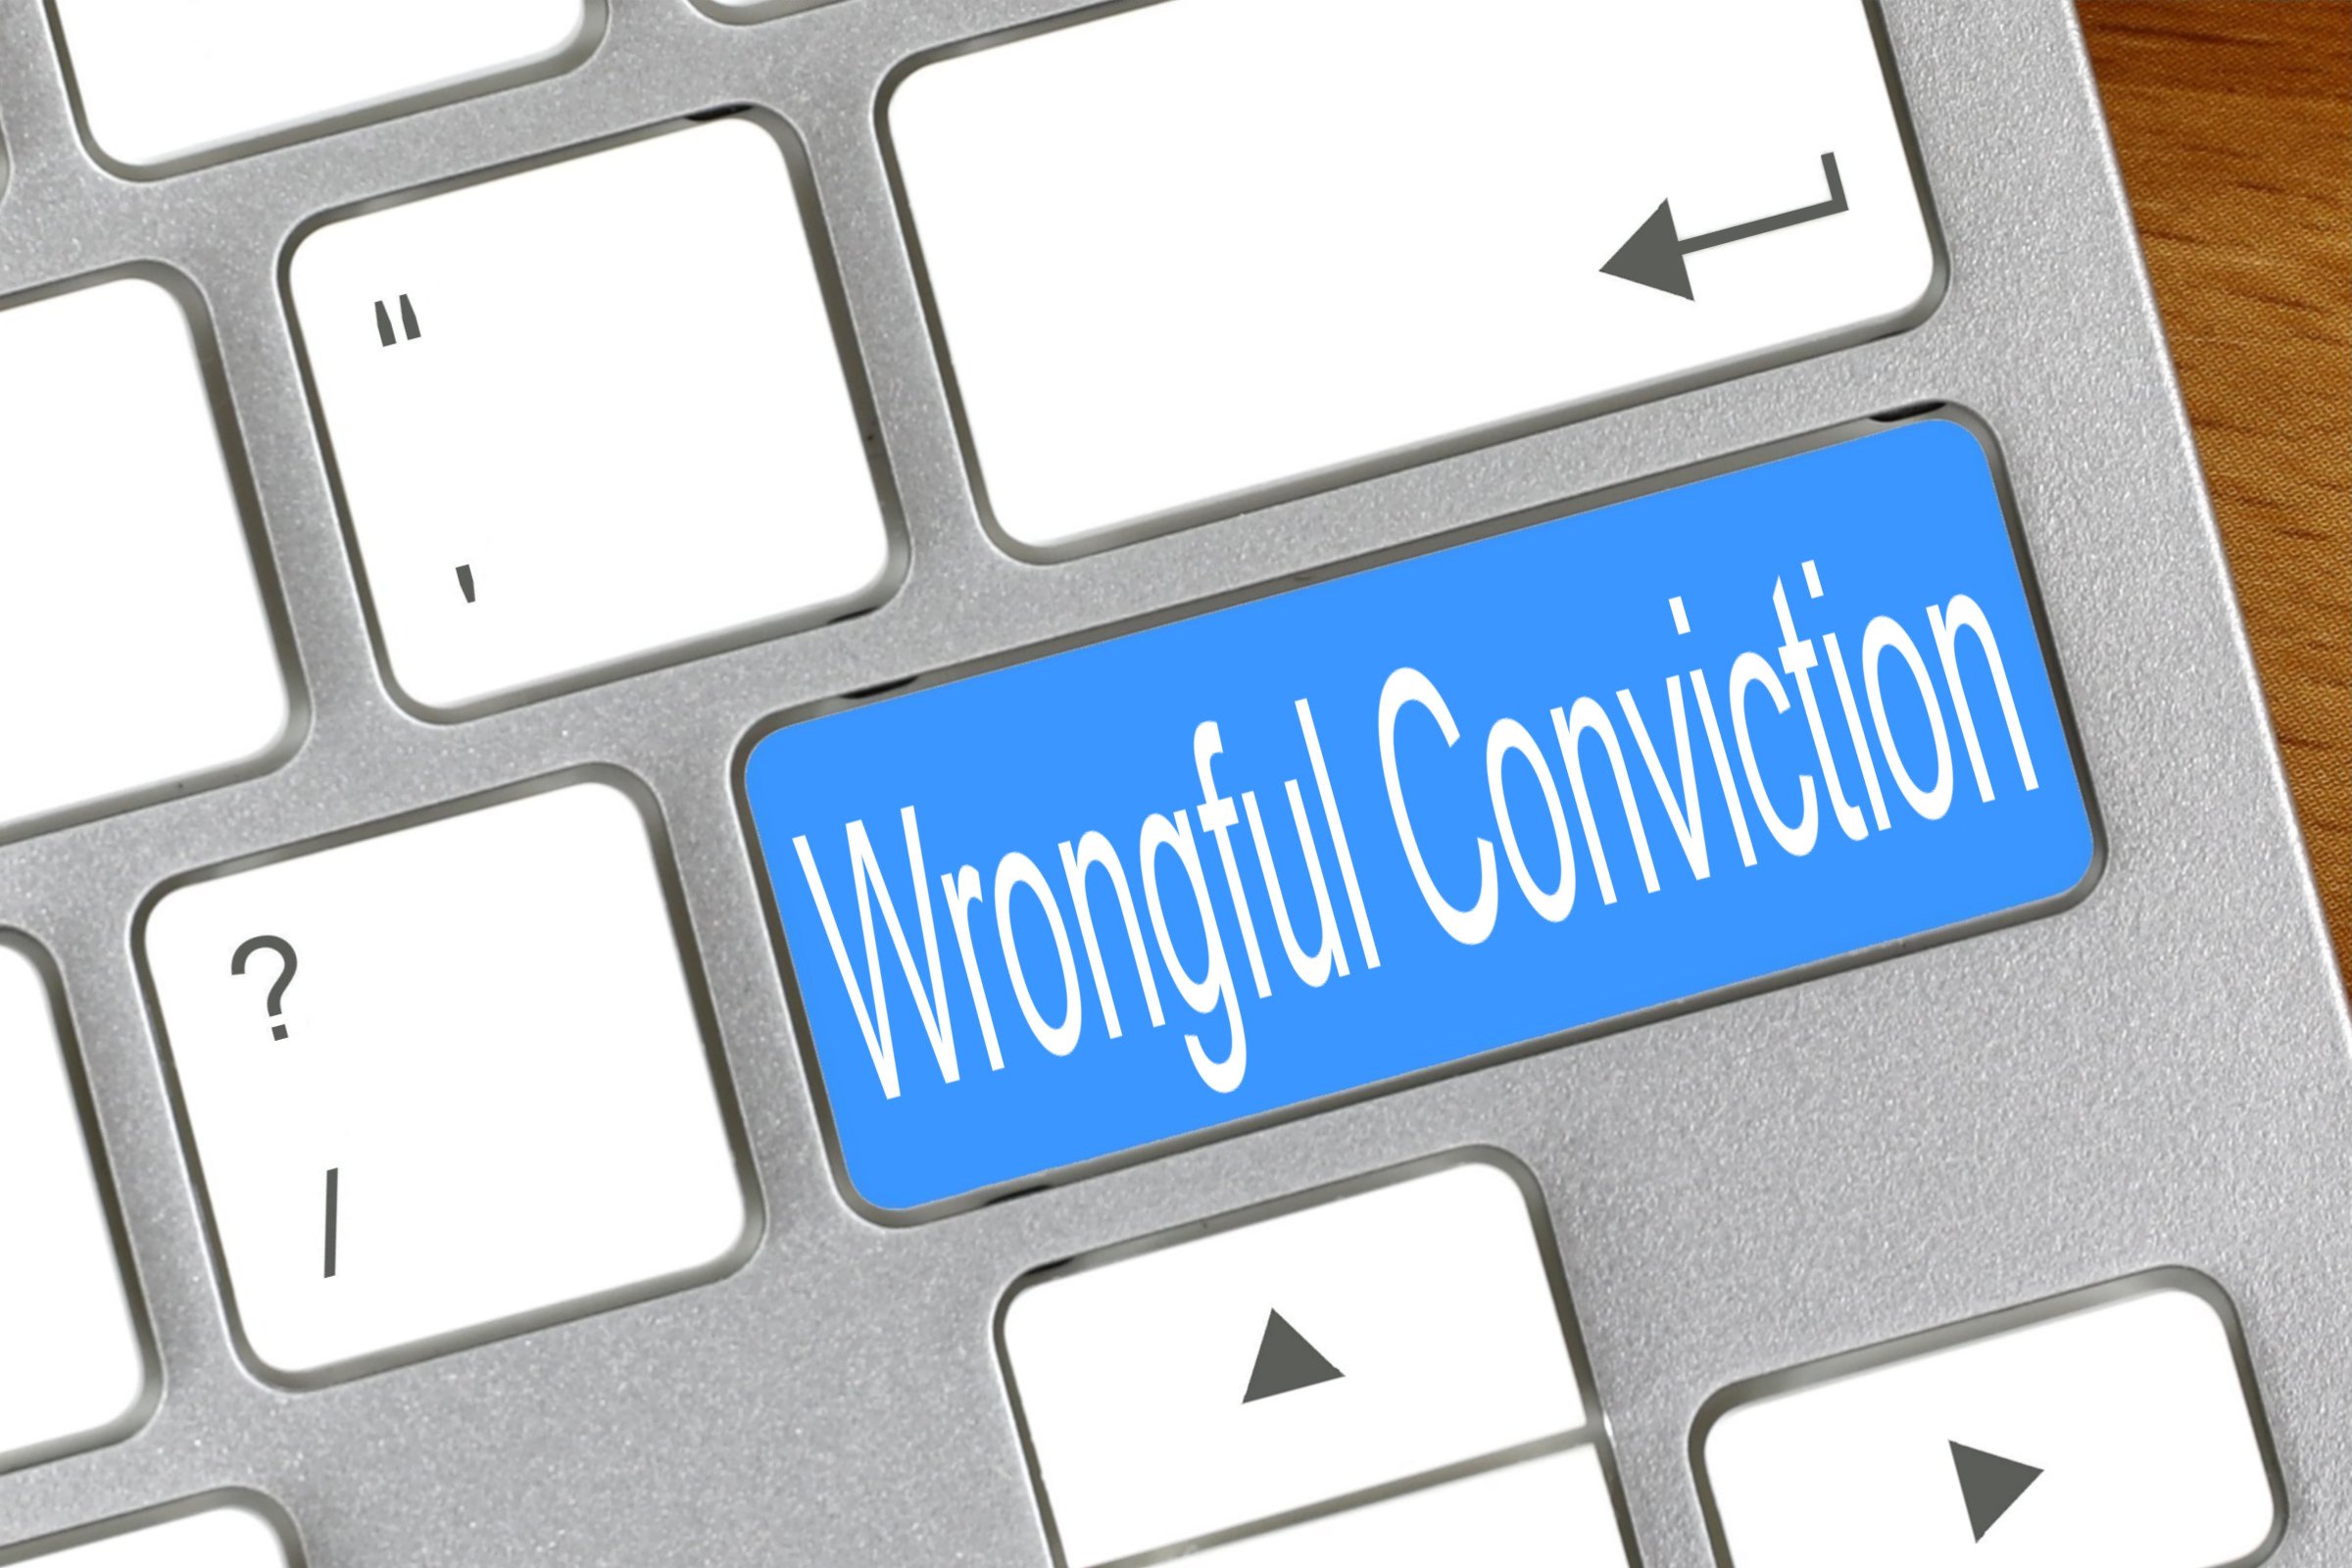 wrongful conviction